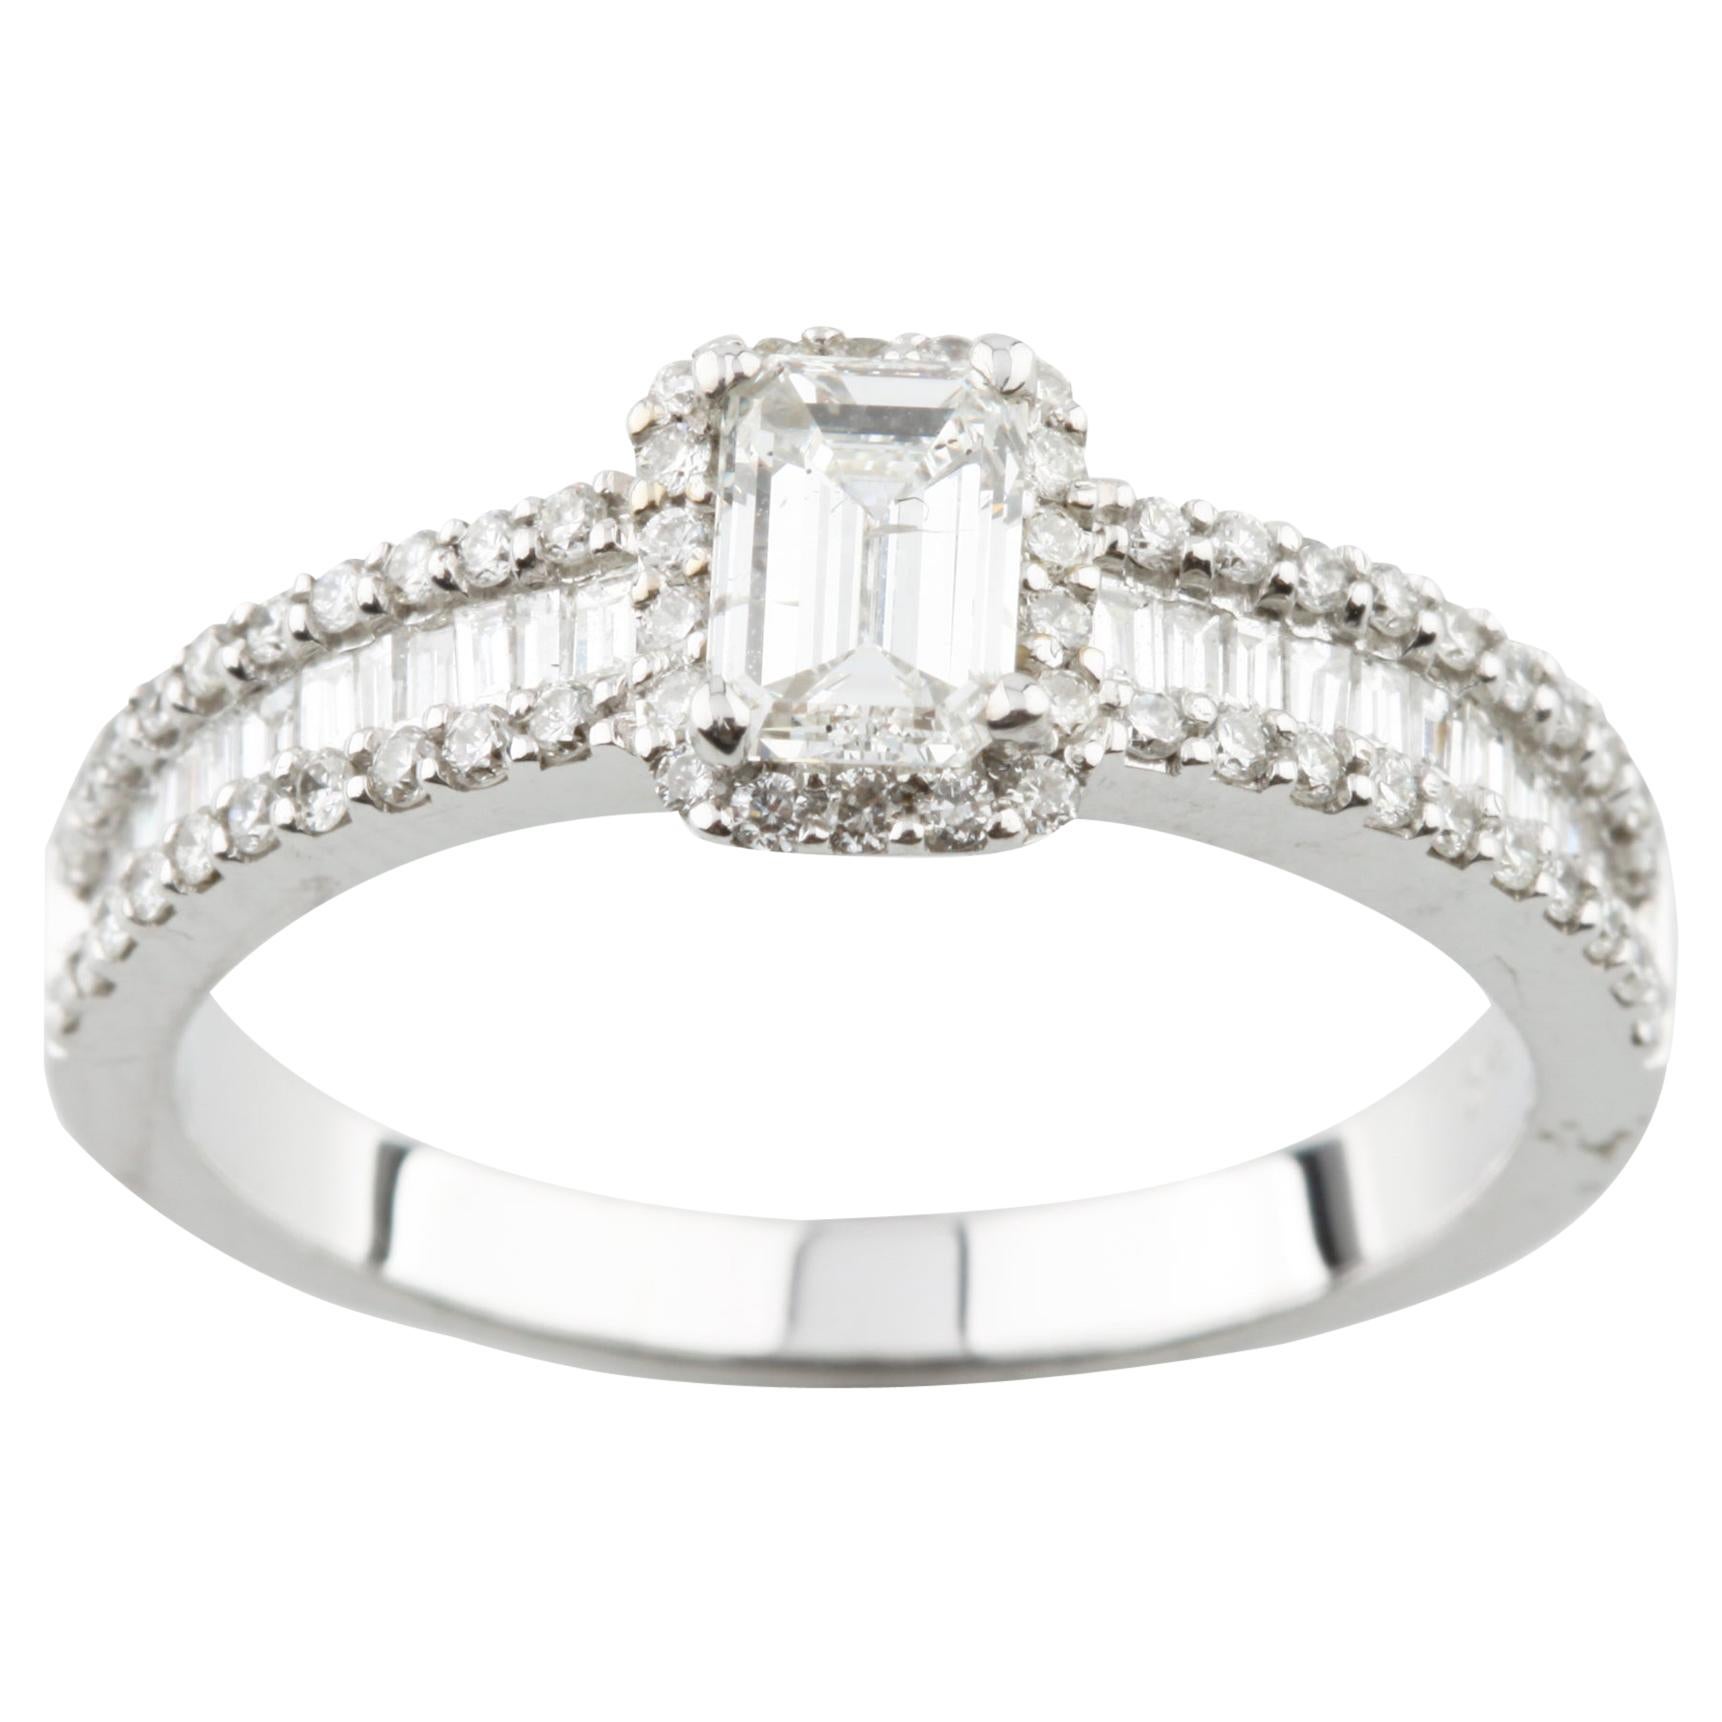 1.05 Carat Emerald Cut Diamond Engagement Ring Set in 14 Karat White Gold For Sale